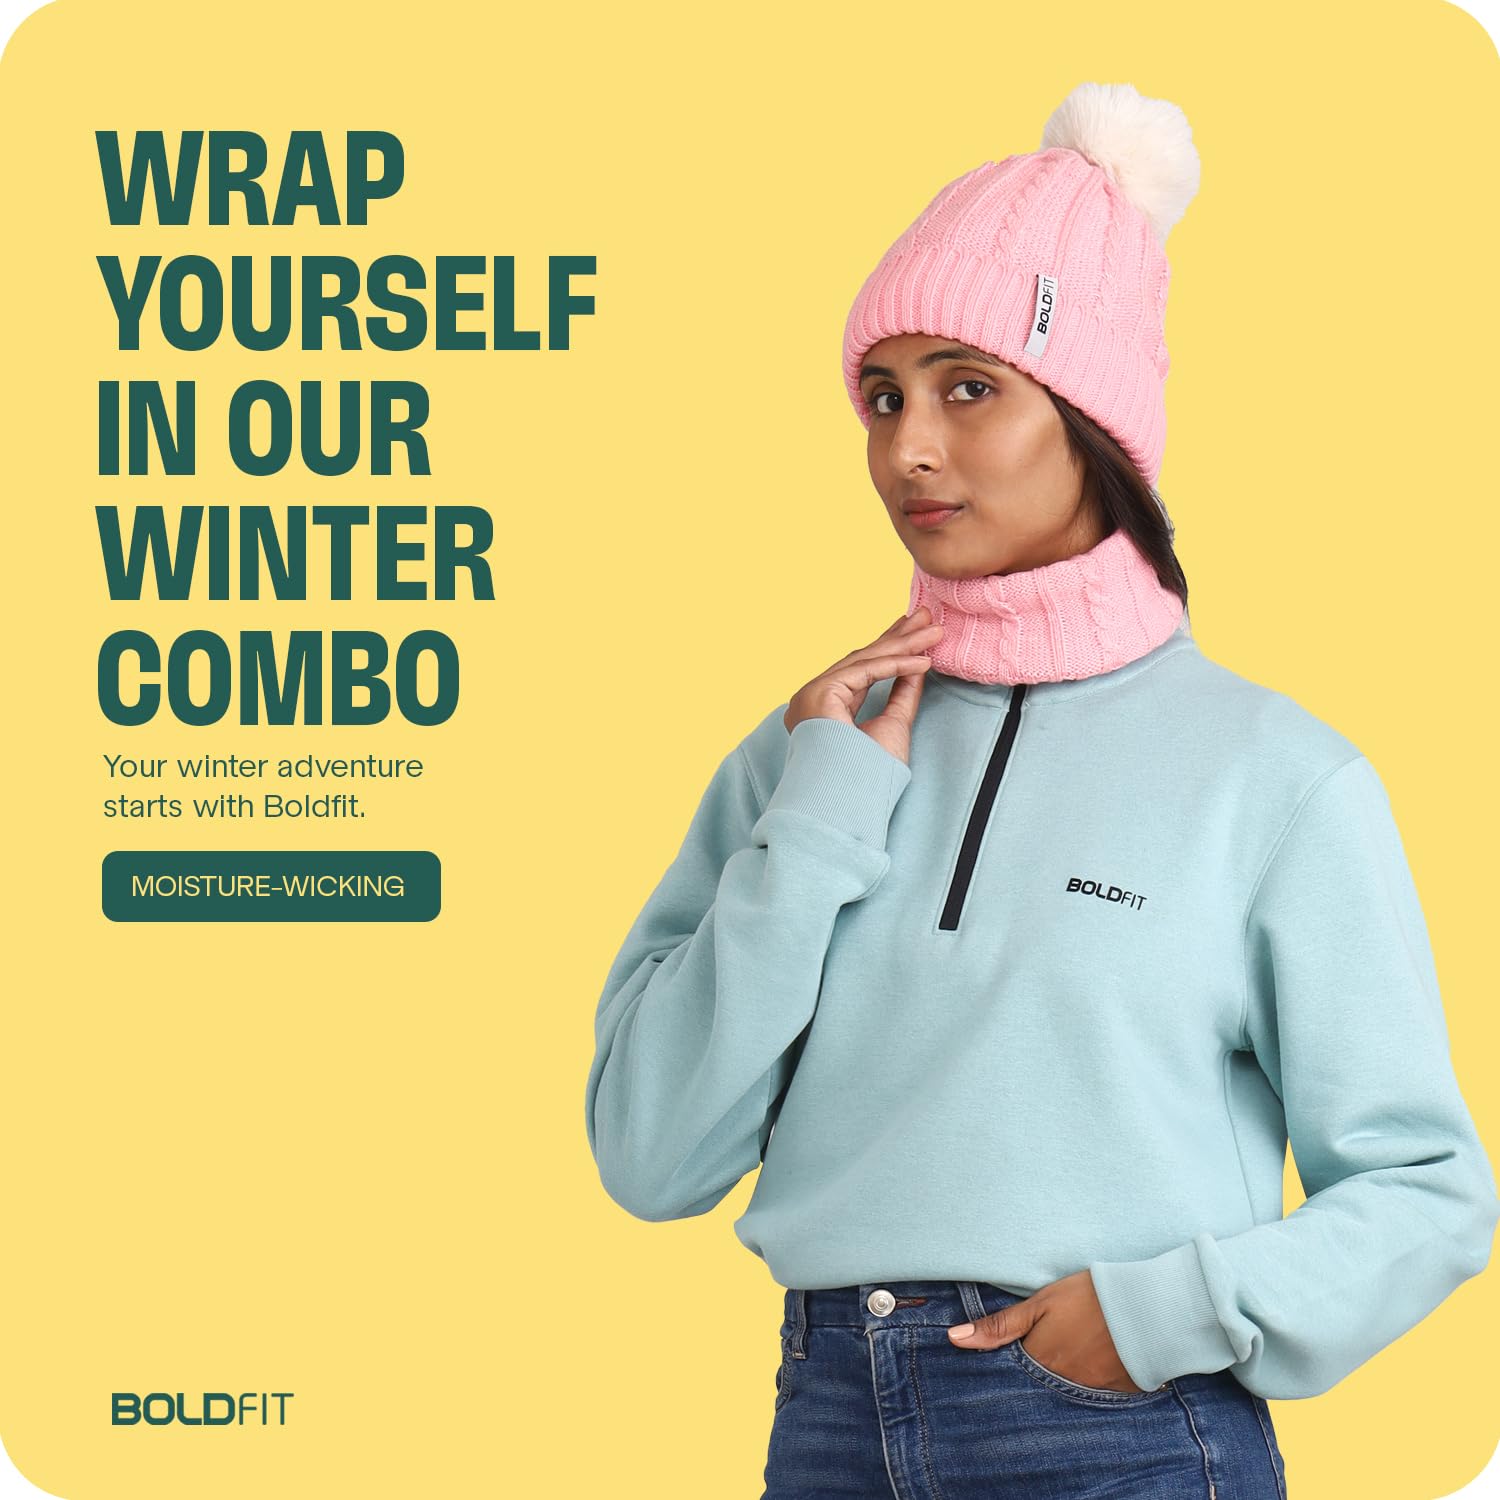 Winter Cap for Women